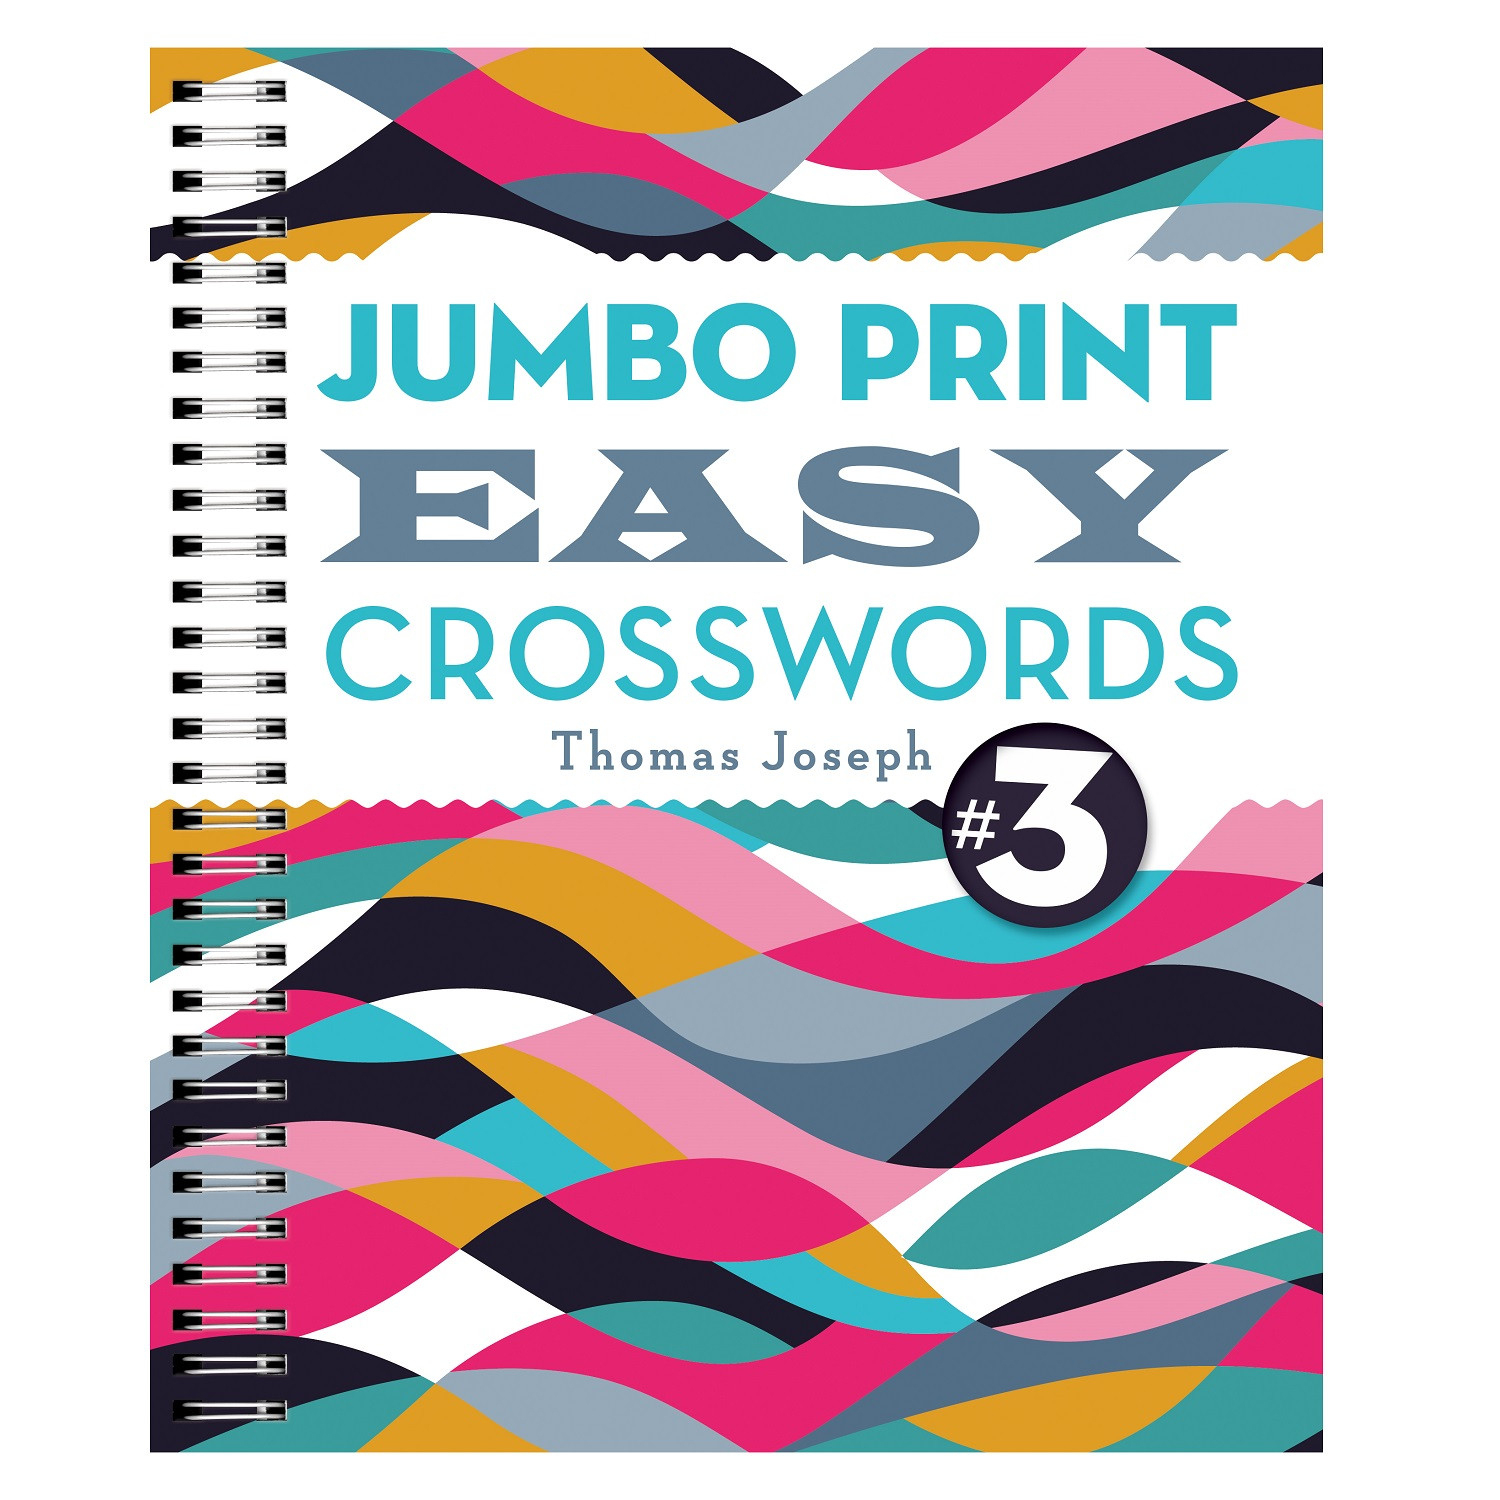 Jumbo Print Easy Crosswords Book 3. Puzzle Book - Puzzle Print Uk